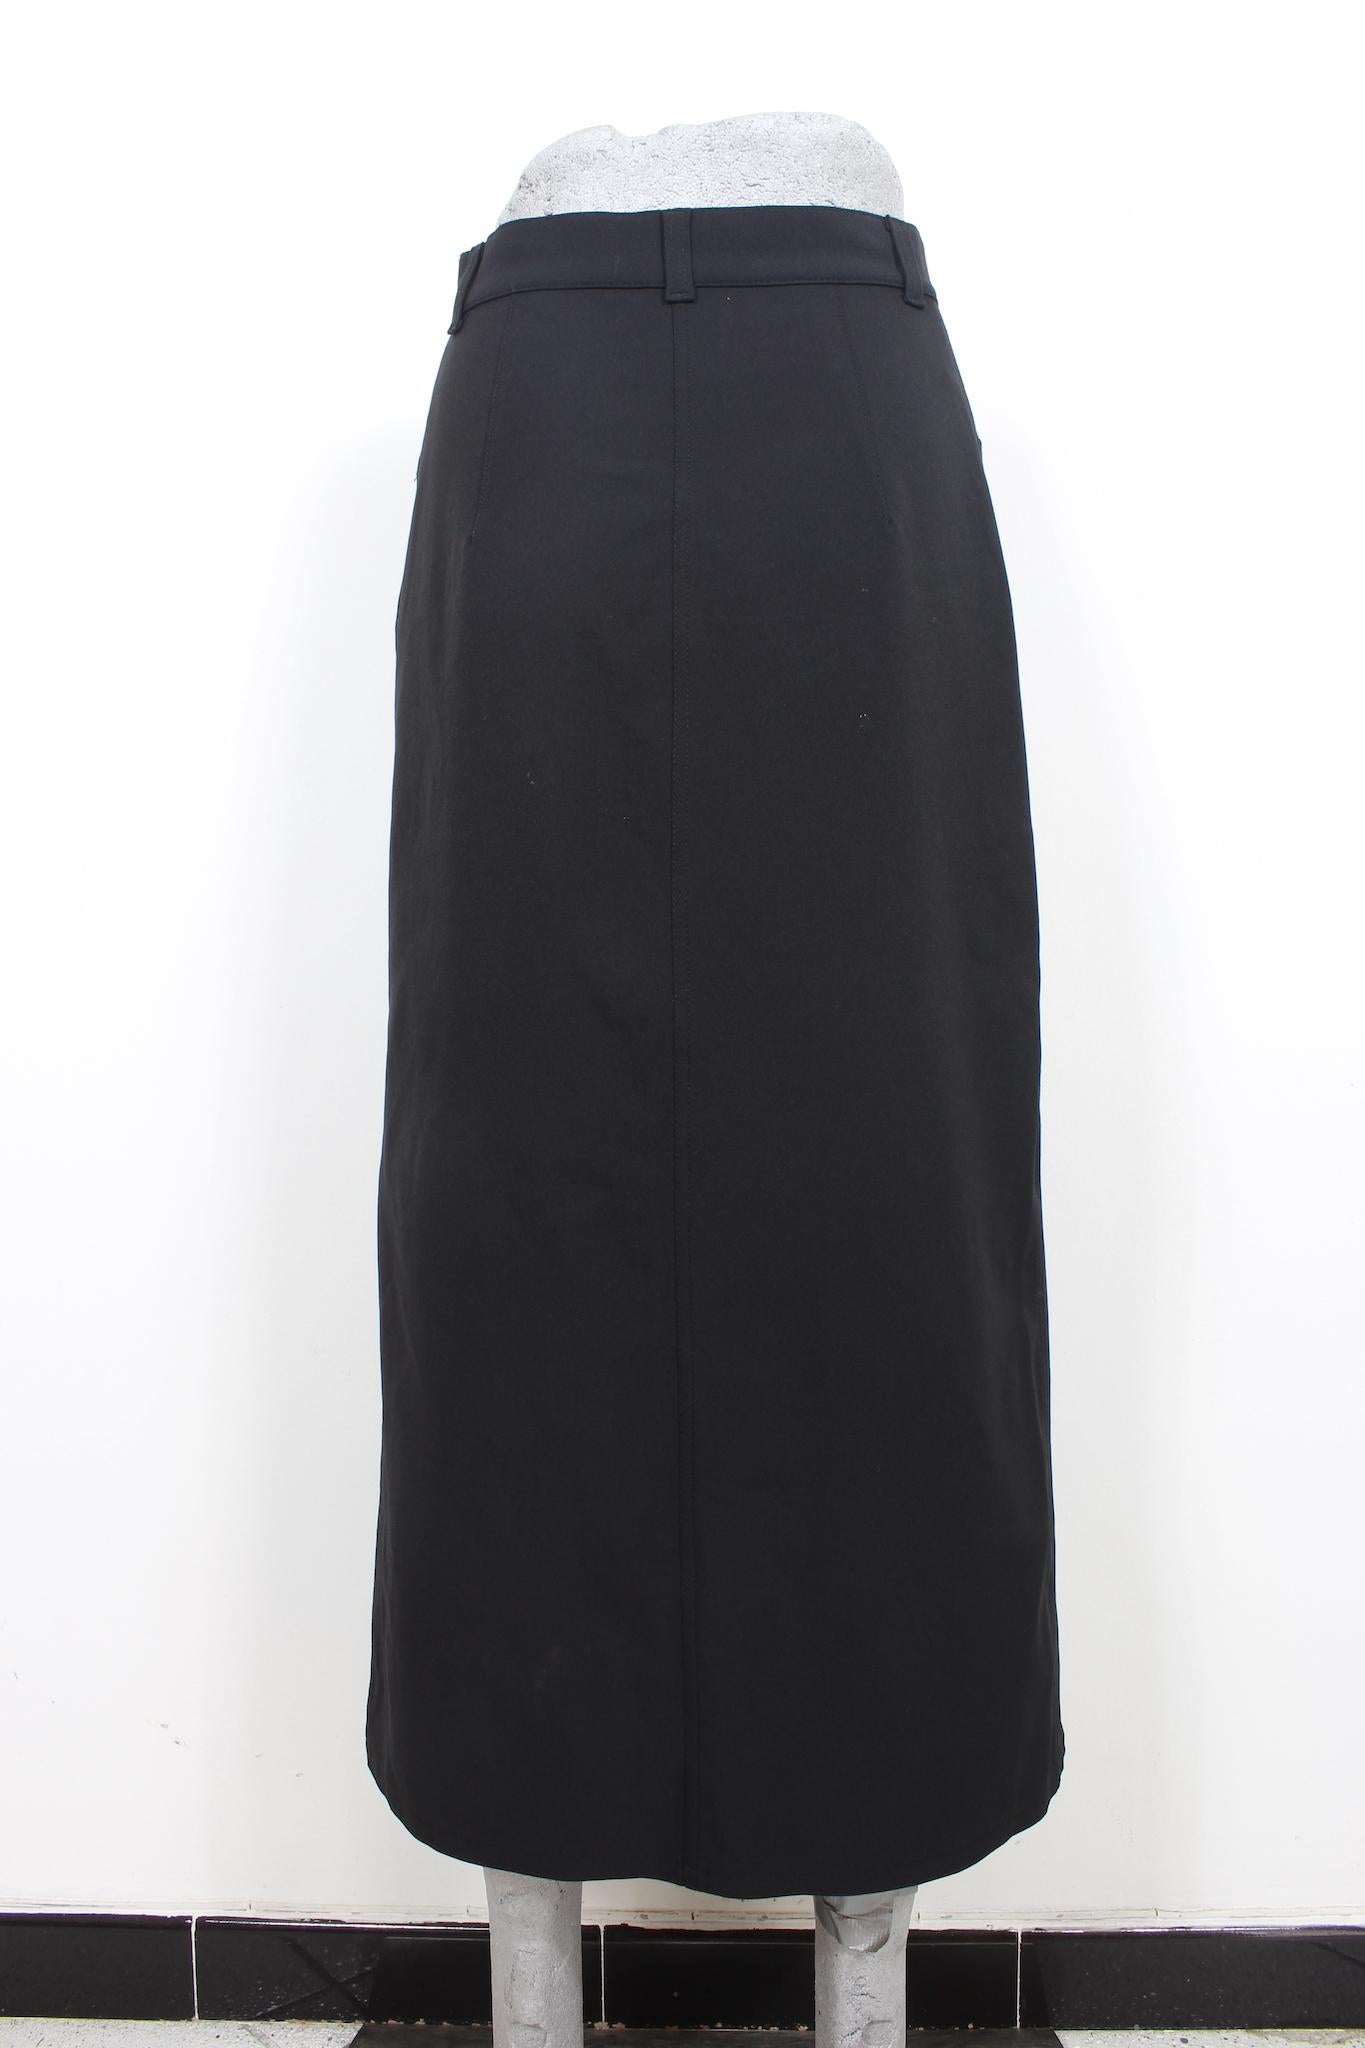 Fendi 90s vintage long skirt. Midi model with slit on front, tight-fitting, black colour, 95% polyamide, 5% elastene fabric. Made in Italy.

Size: 42 It 8 Us 10 Uk

Waist: 33 cm
Length: 86 cm
Hips: 46 cm
